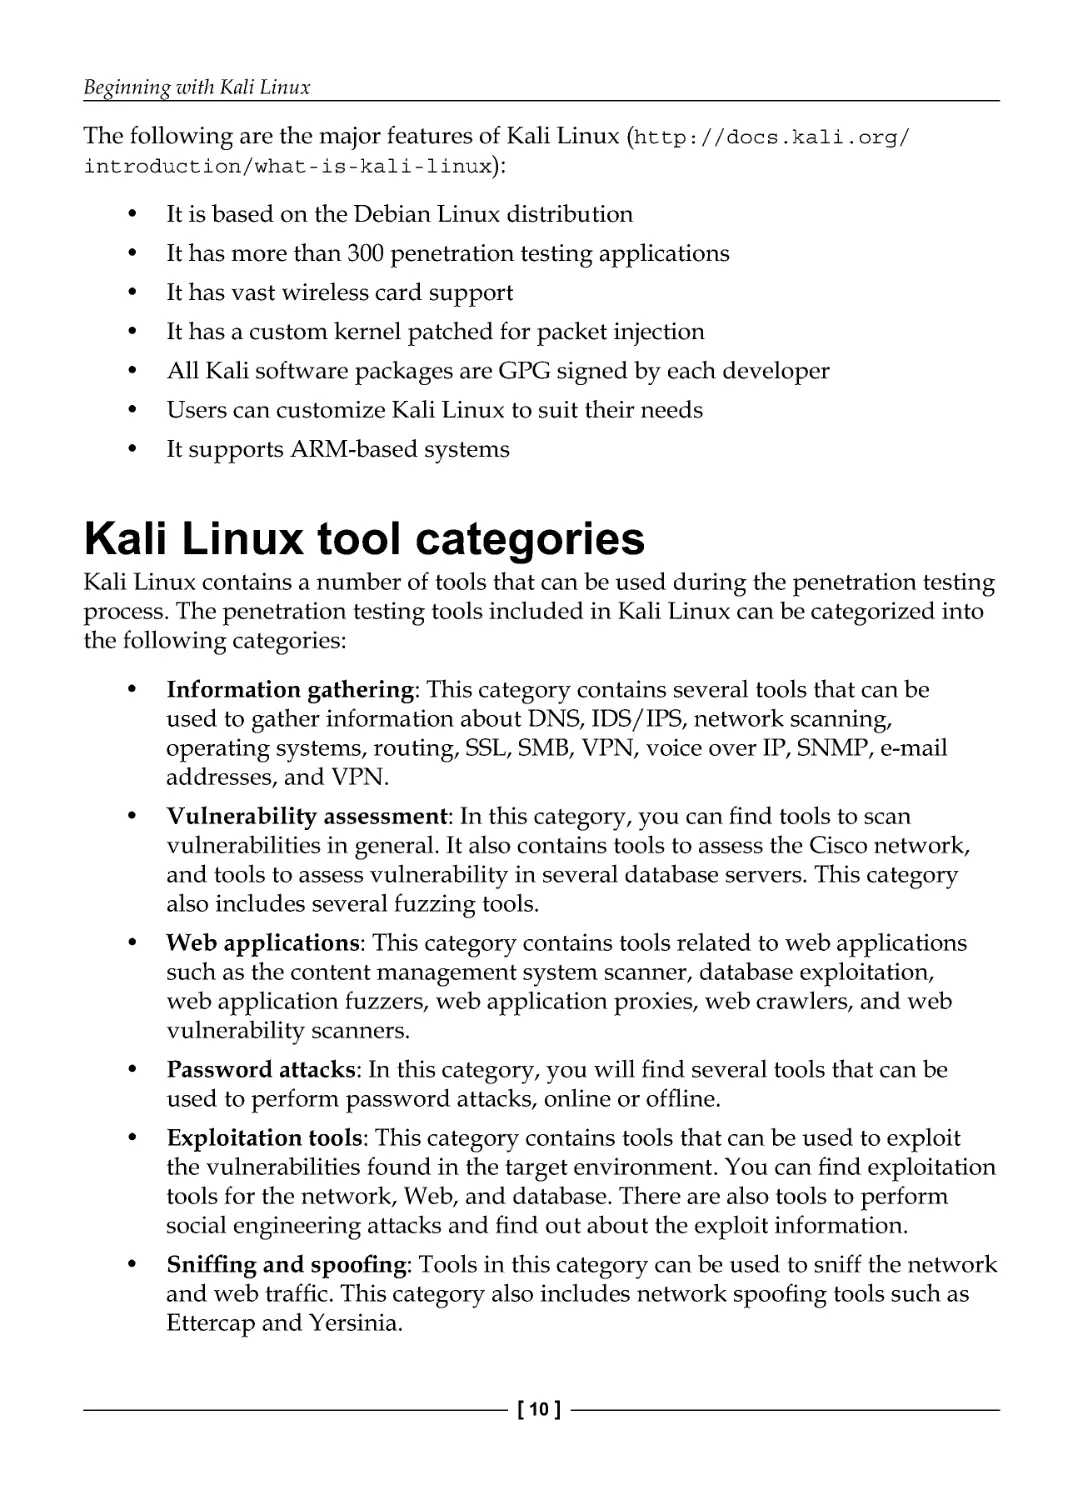 Kali Linux tool categories